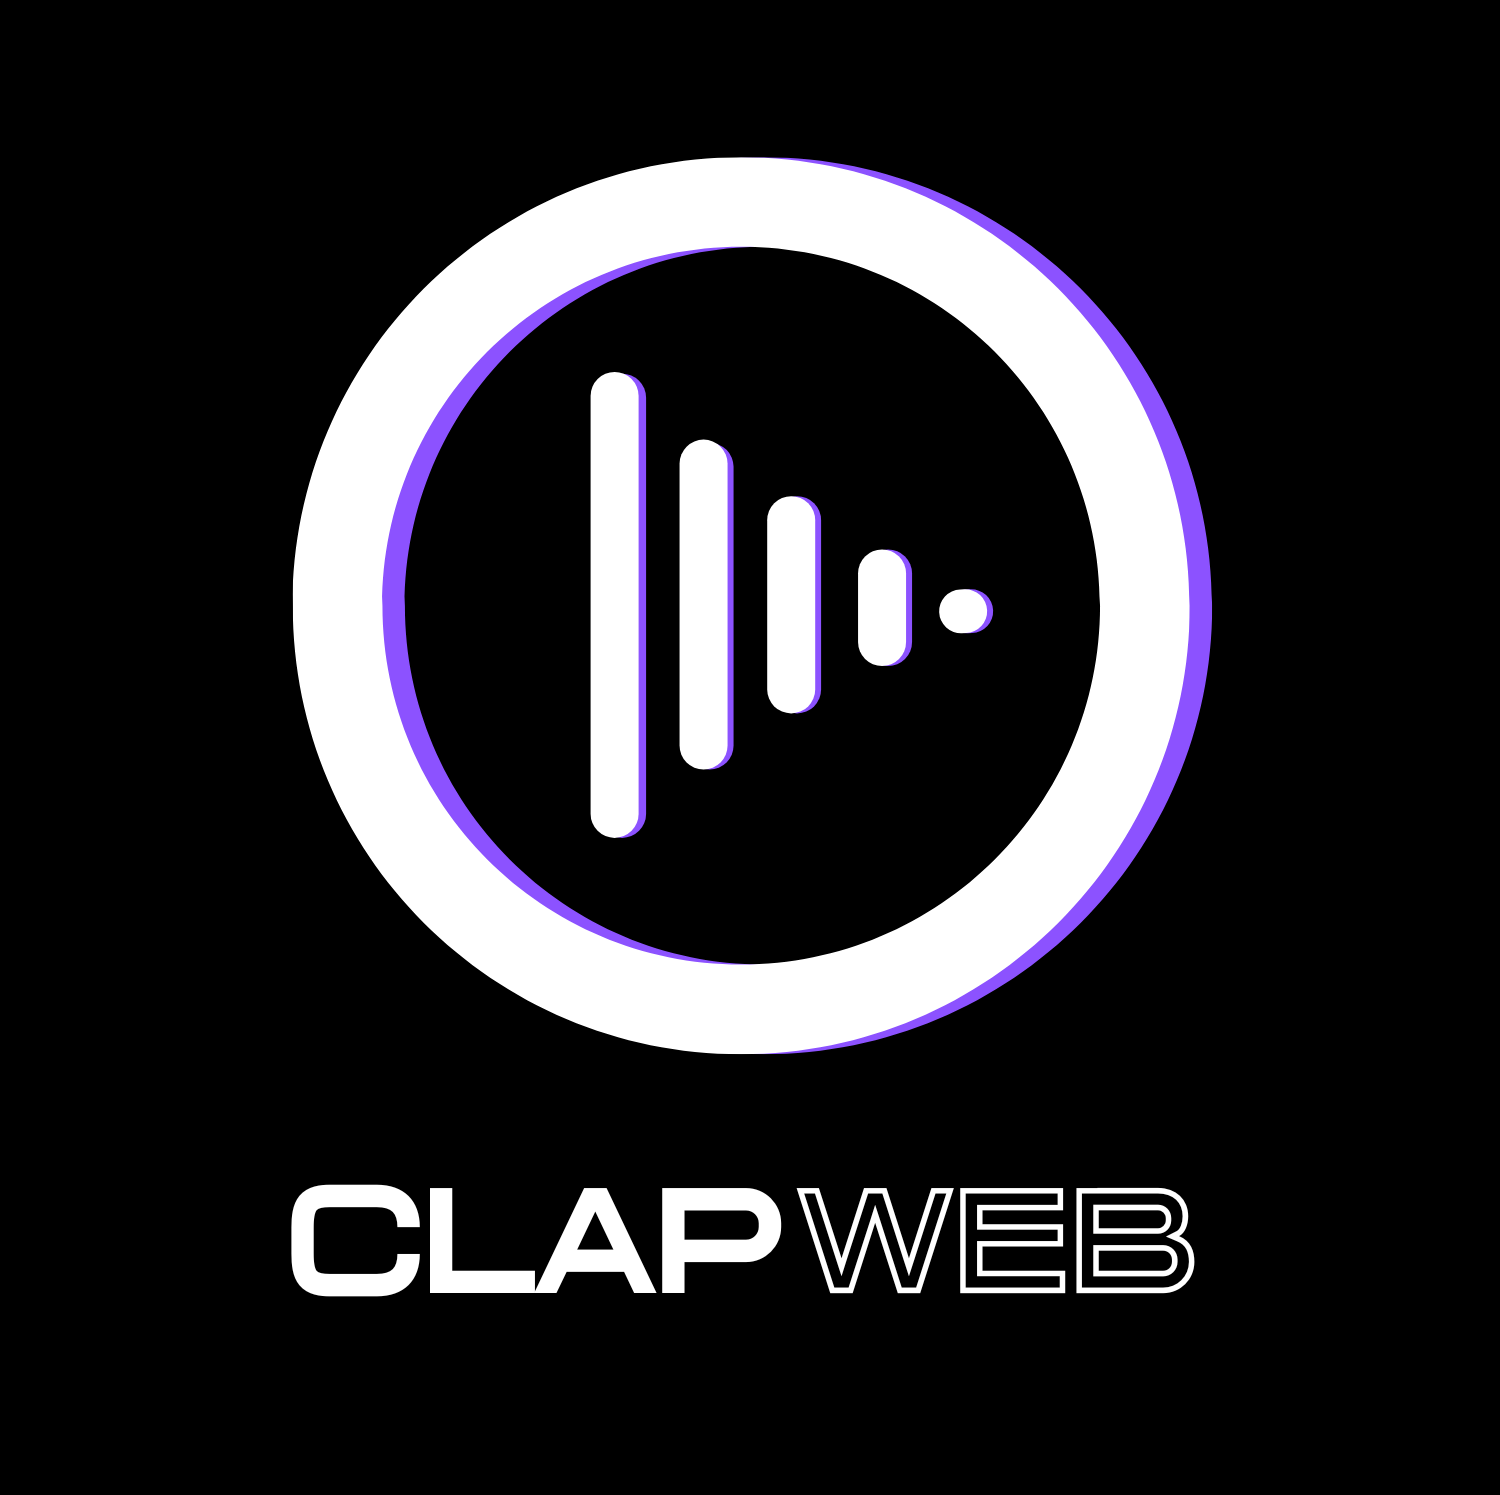 Clapweb